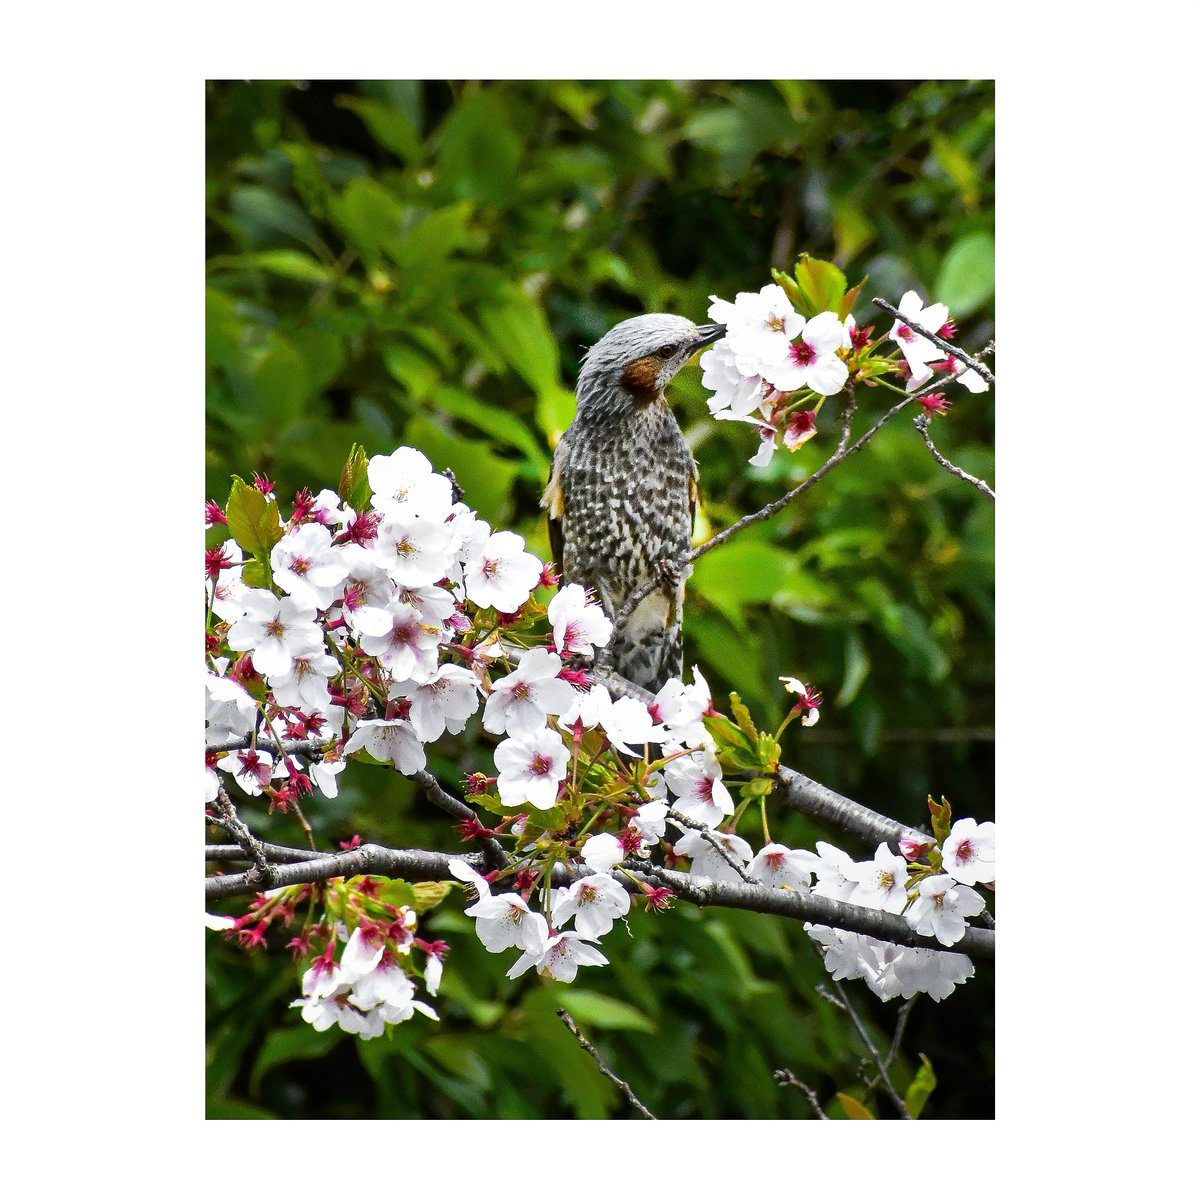 『 山水花鳥風月図 ・鳥 ／The beauties of nature・The Bird 』
「 ヒヨドリ・鵯、白頭鳥 」Brown-eared Bulbul.
#Wildgrass #野鳥 #Wildbird #自然 #Nature #風景 #Landscape #光景 #花 #flower #ヒヨドリ #鵯 #Brown_eared_Bulbul